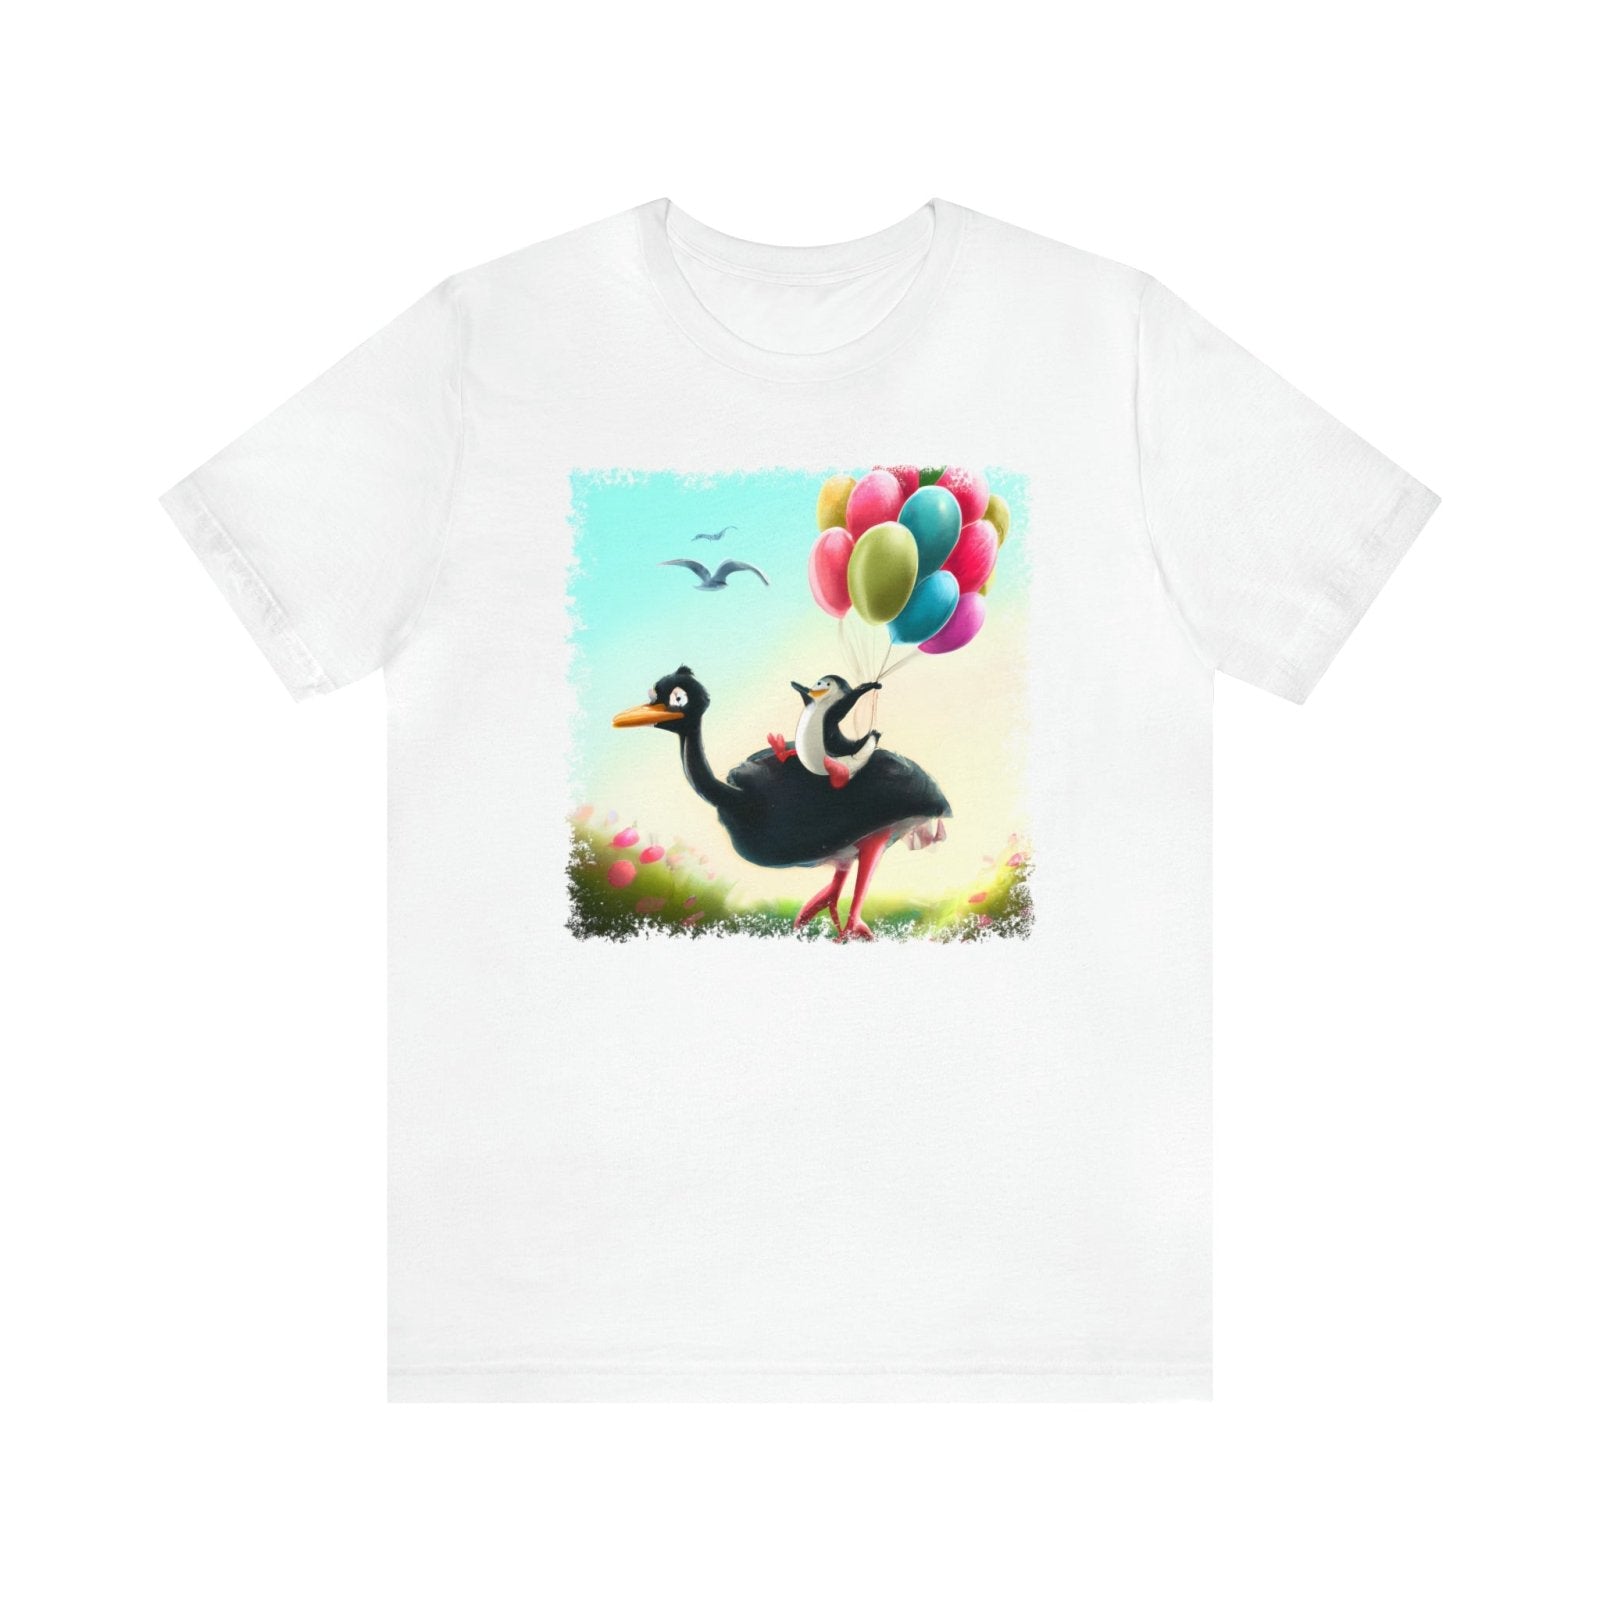 Ostrich Elevations Unisex T-Shirt, flying penguin shirt, flying ostrich apparel, penguin humor, White - Subtle Blue M